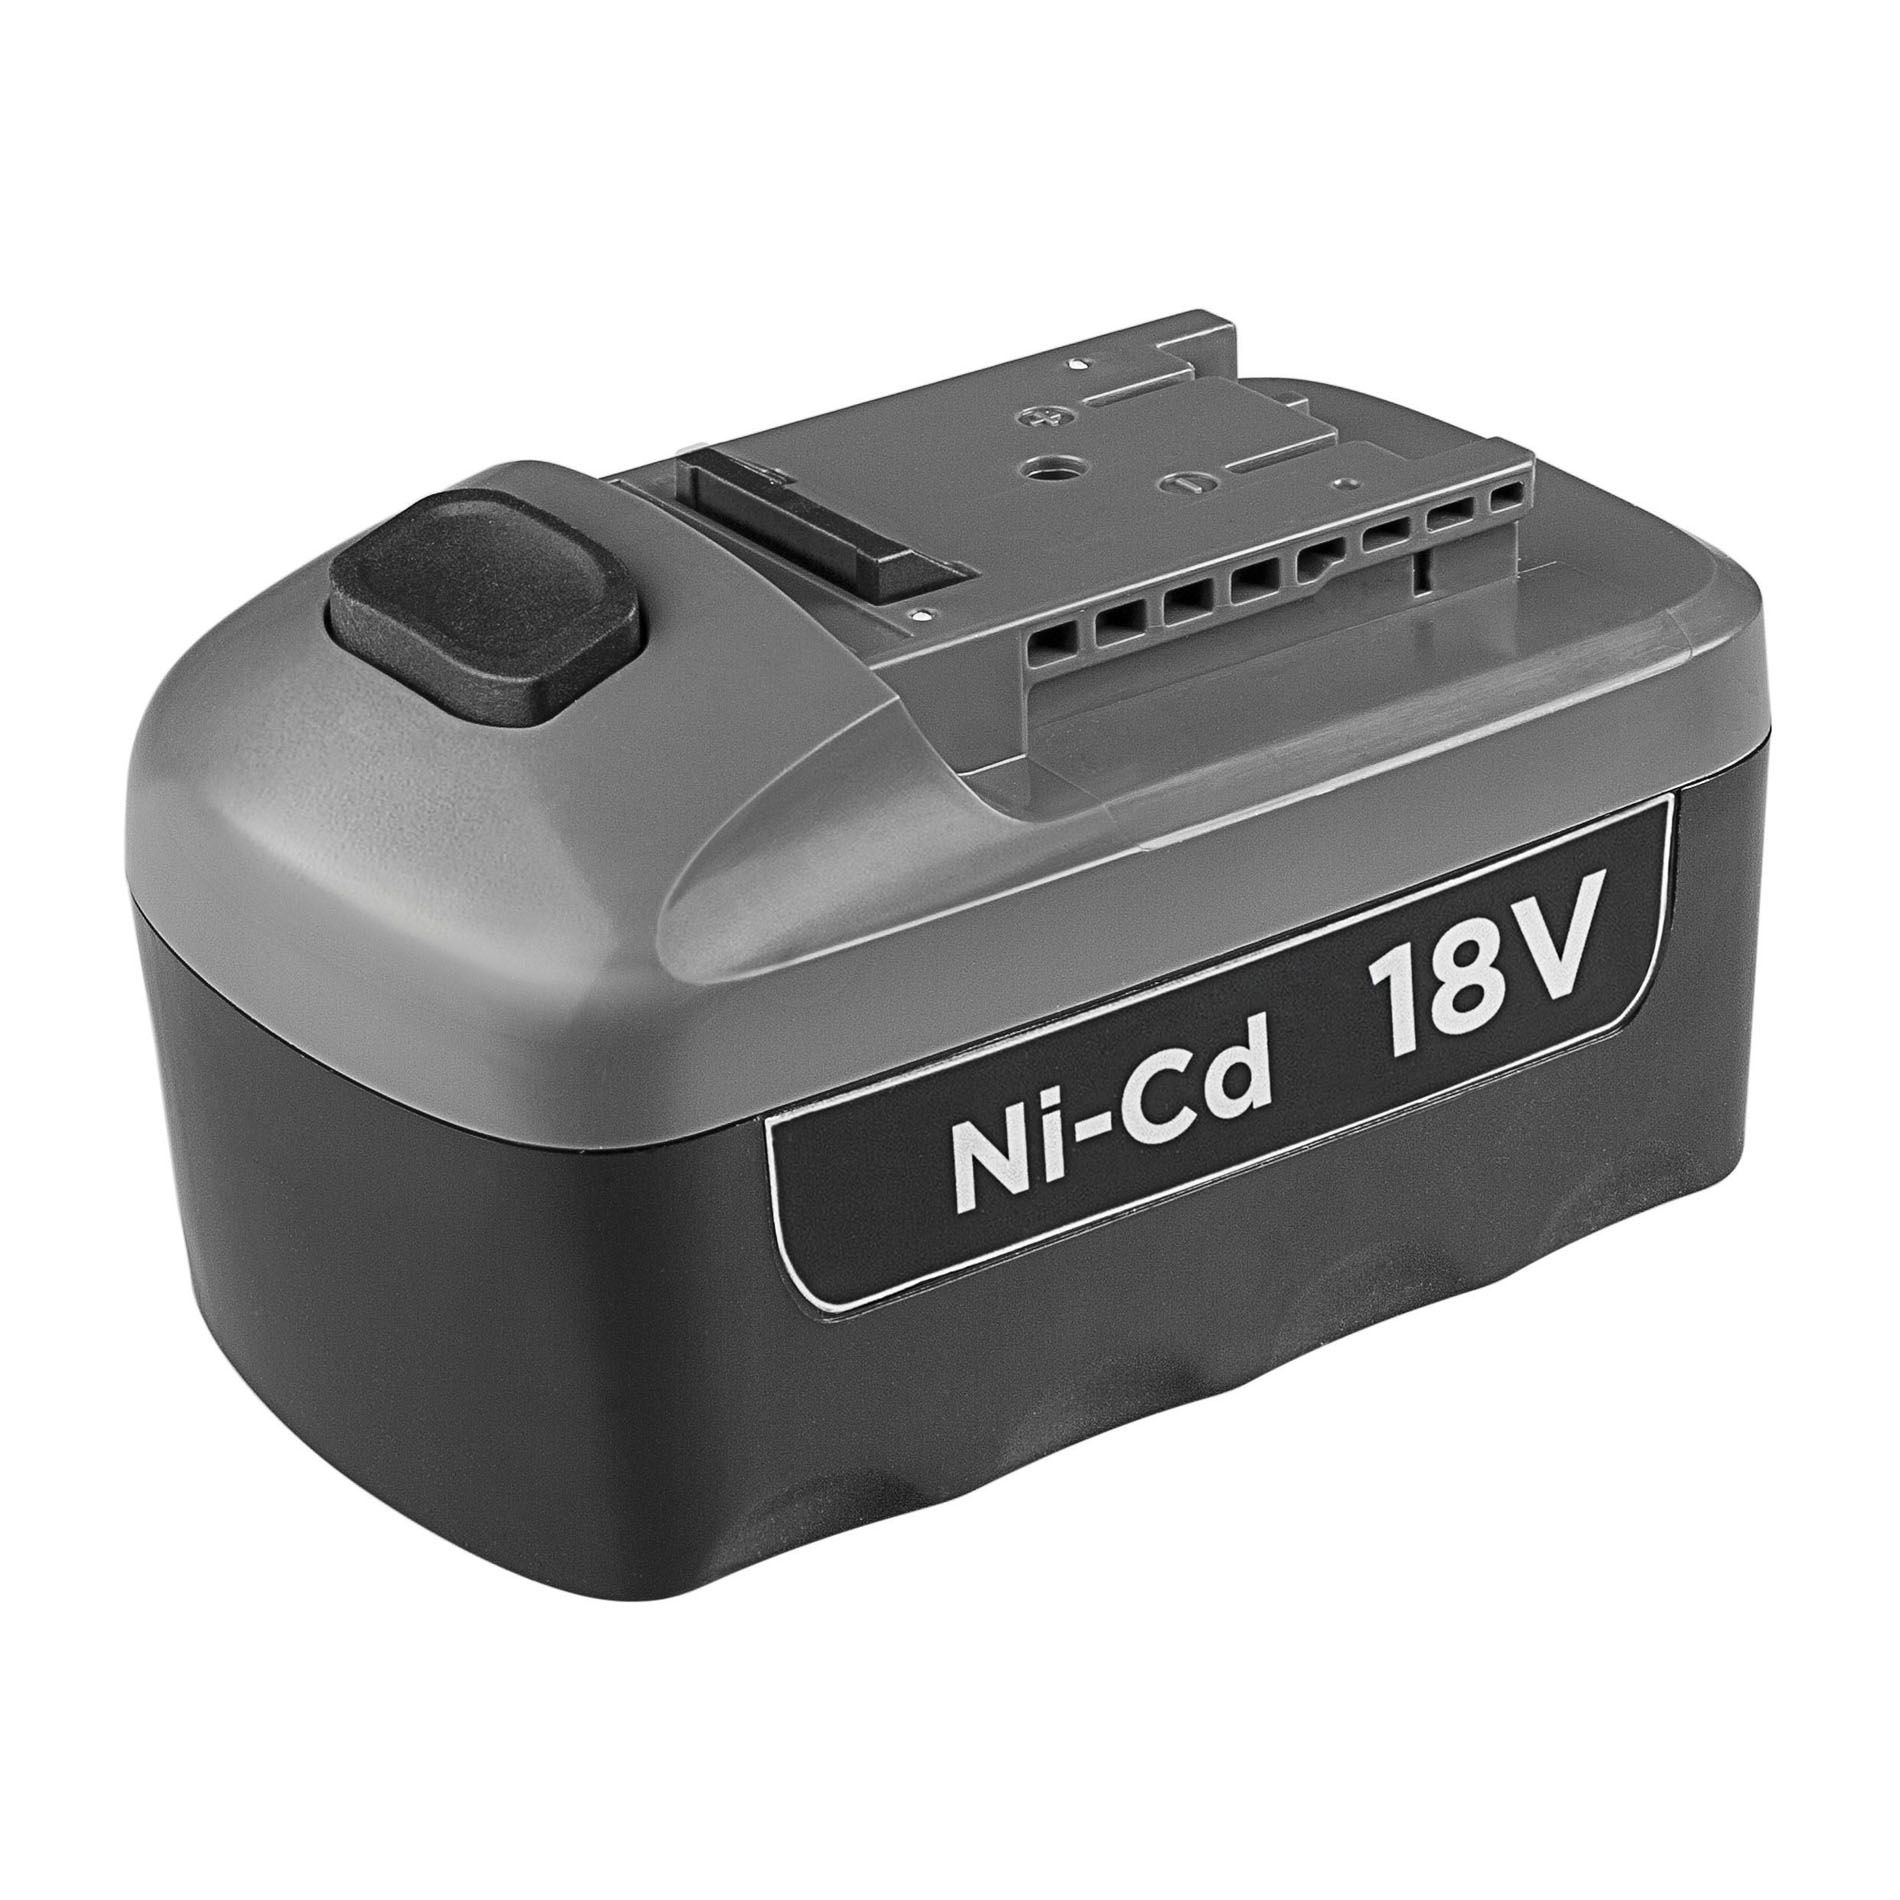 Craftsman 18.0 Volt NiCd Battery